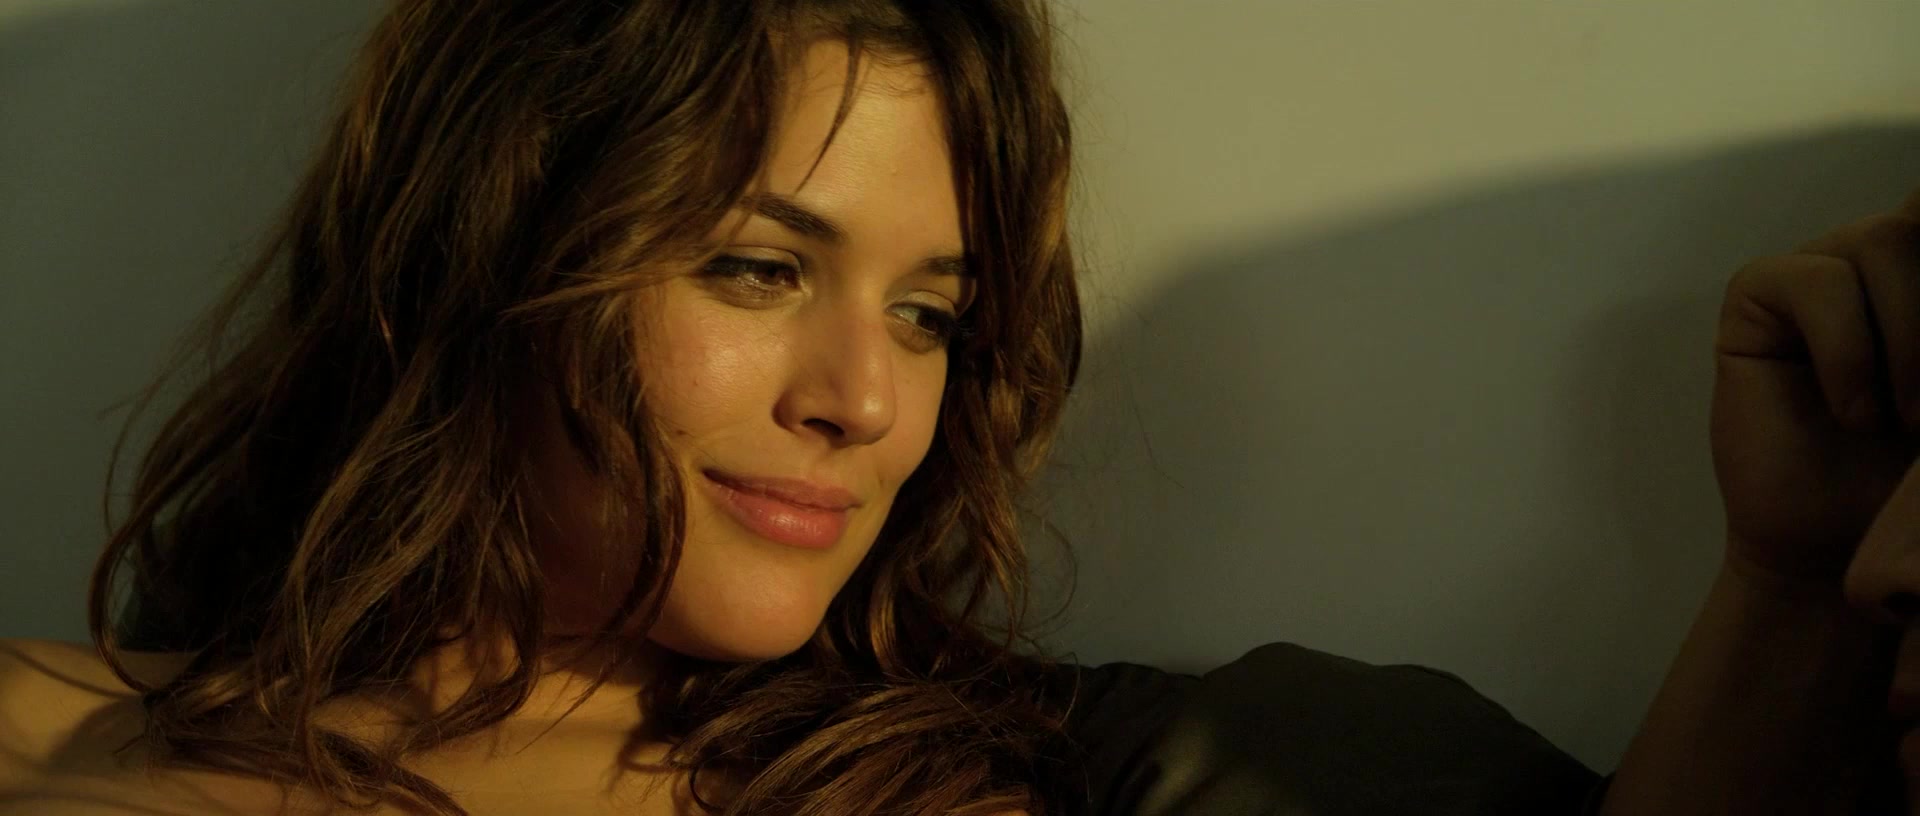 Adriana Ugarte - Combustion (2013) HD 1080p - Celebs Roulette Tube